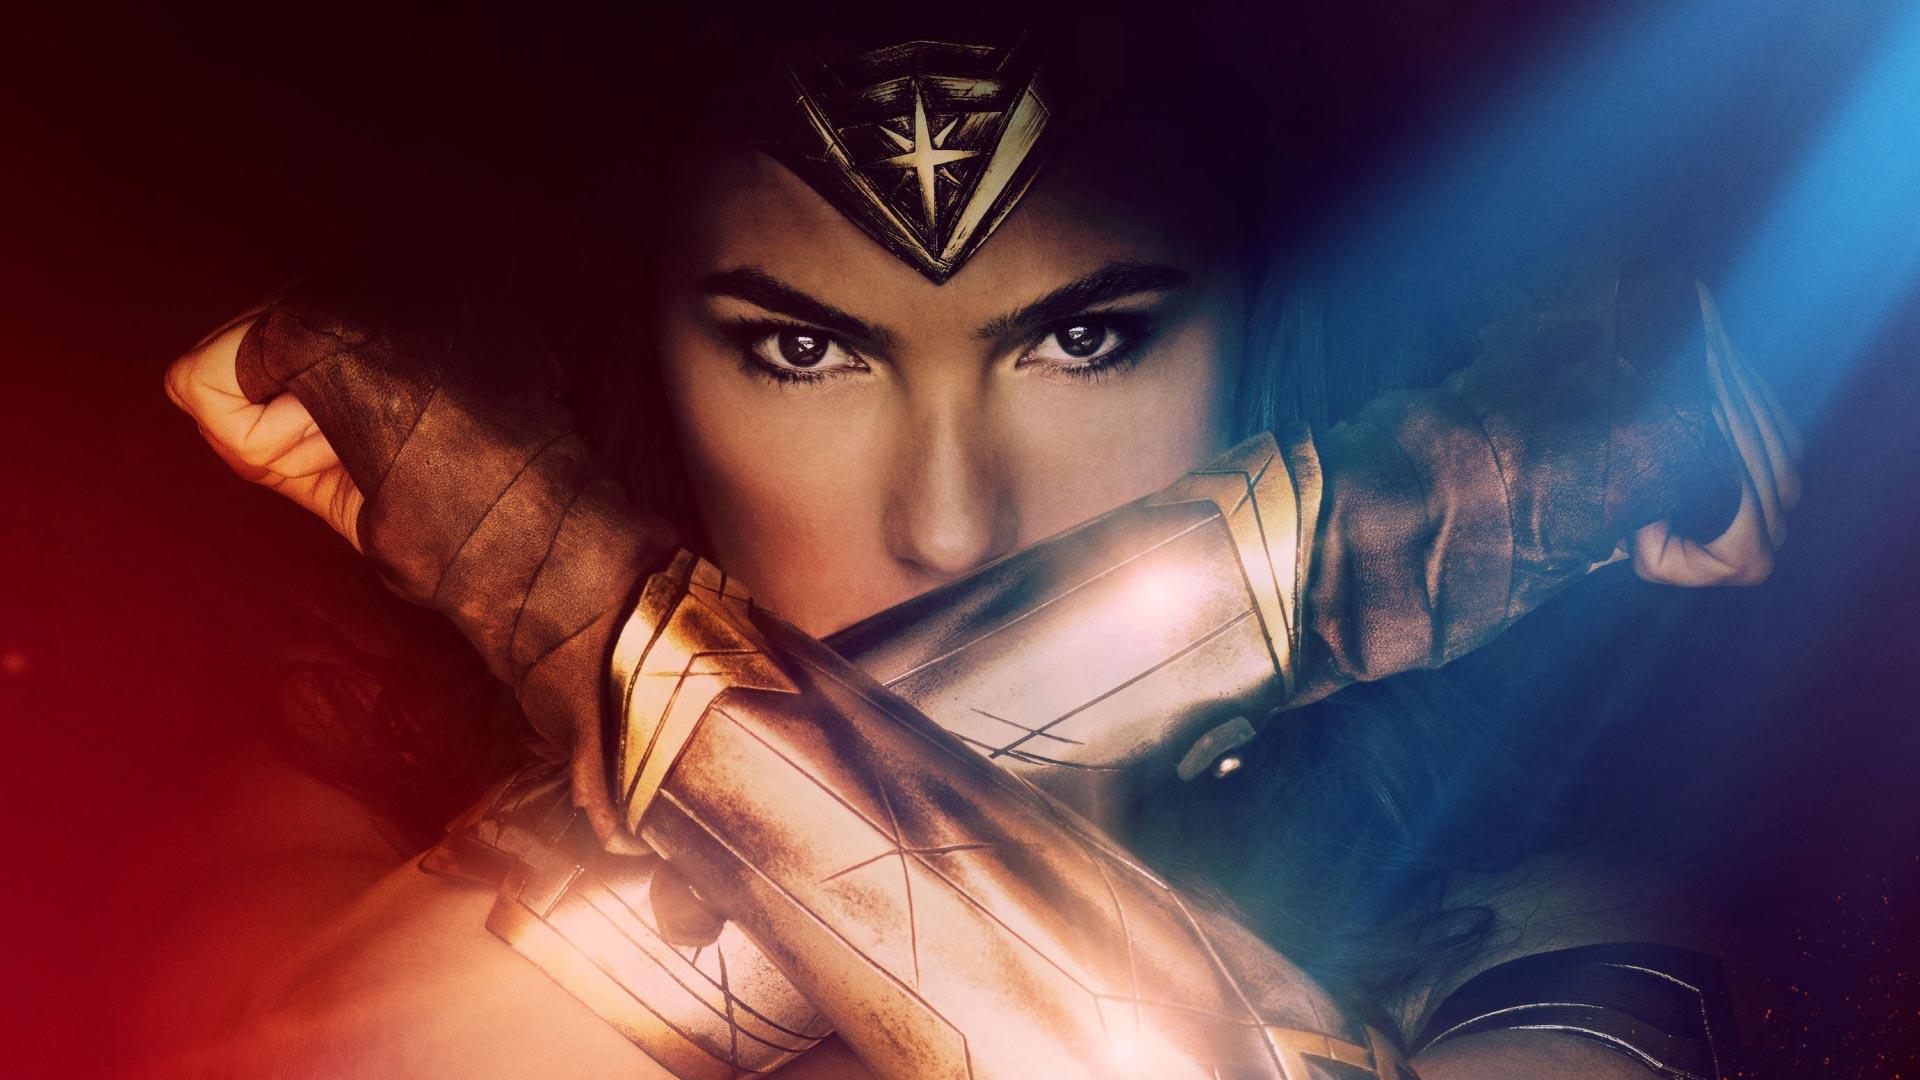 Wonder Woman (Movie) Theme for Windows 10